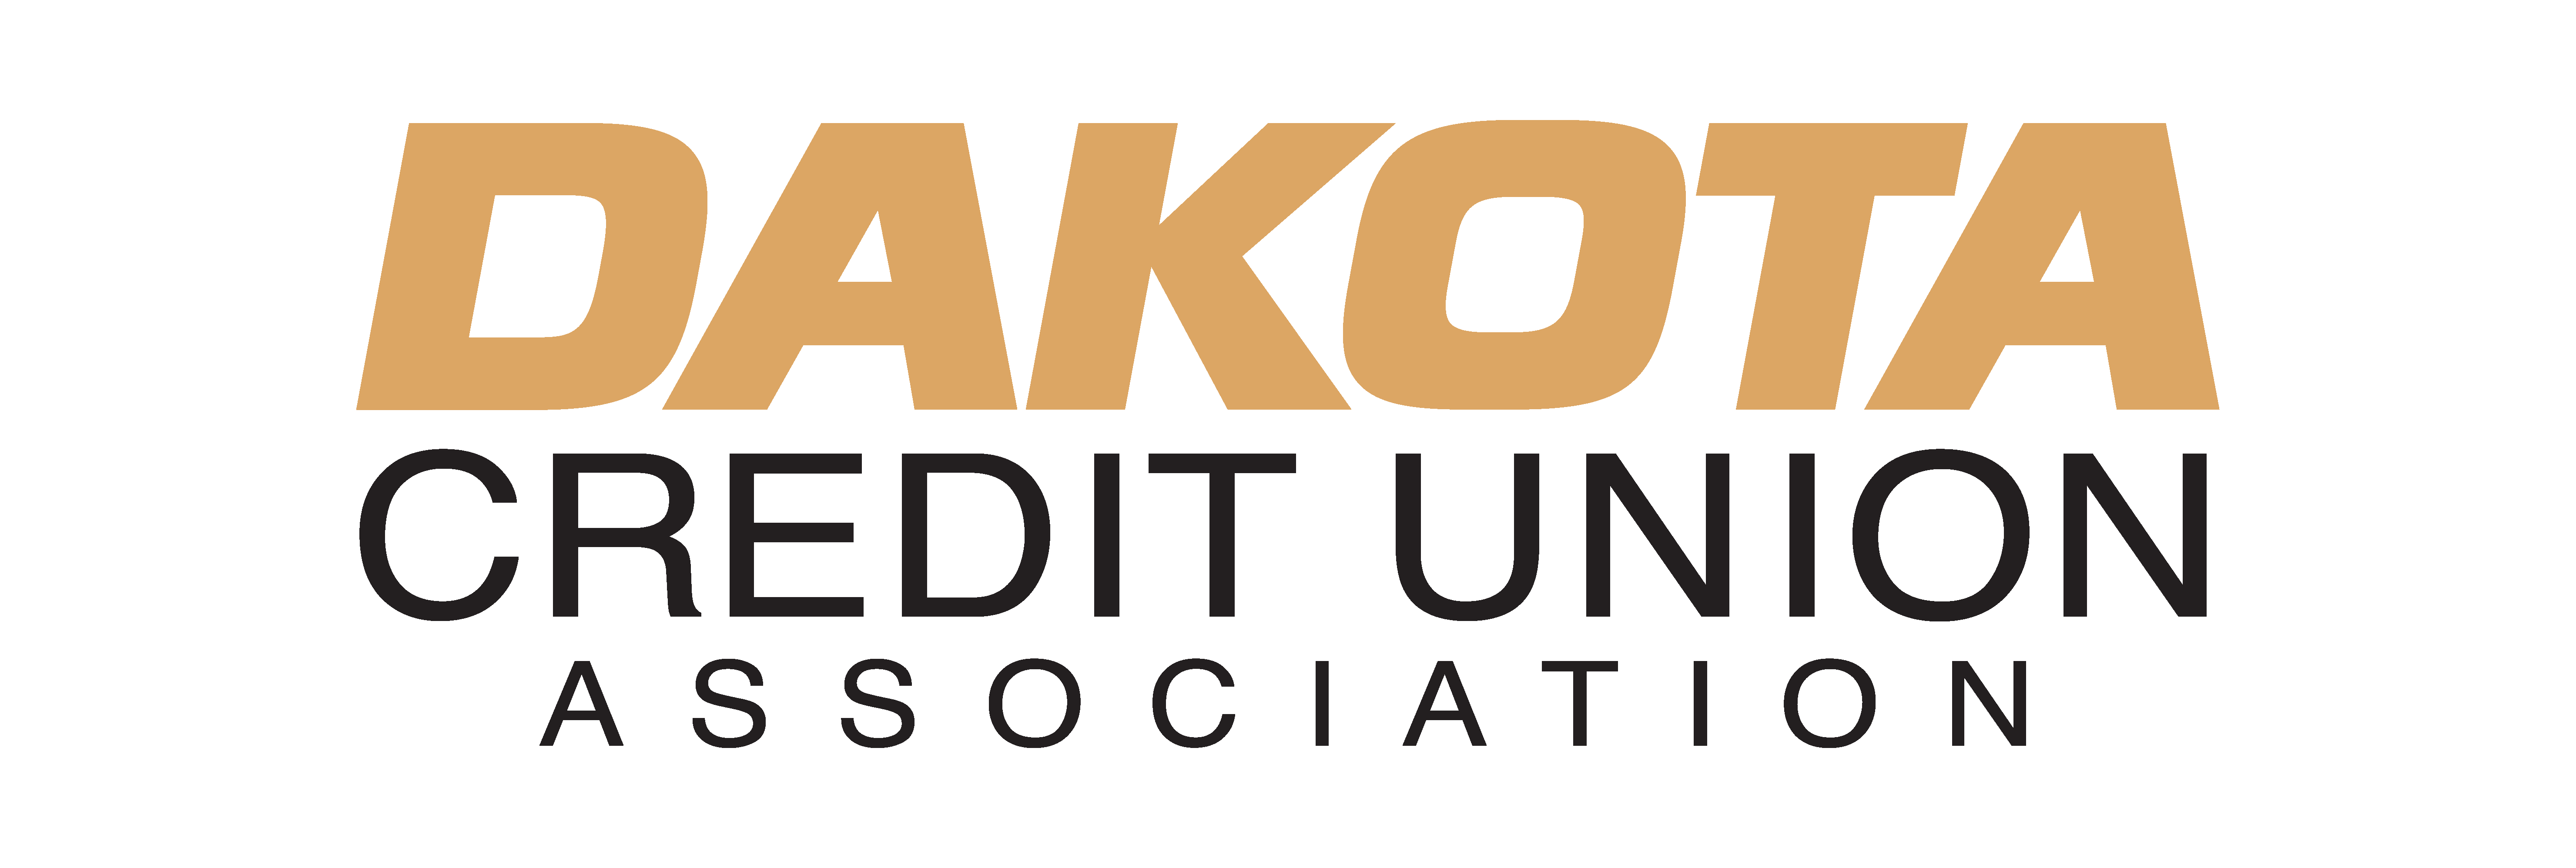 Dakota Credit Union Association